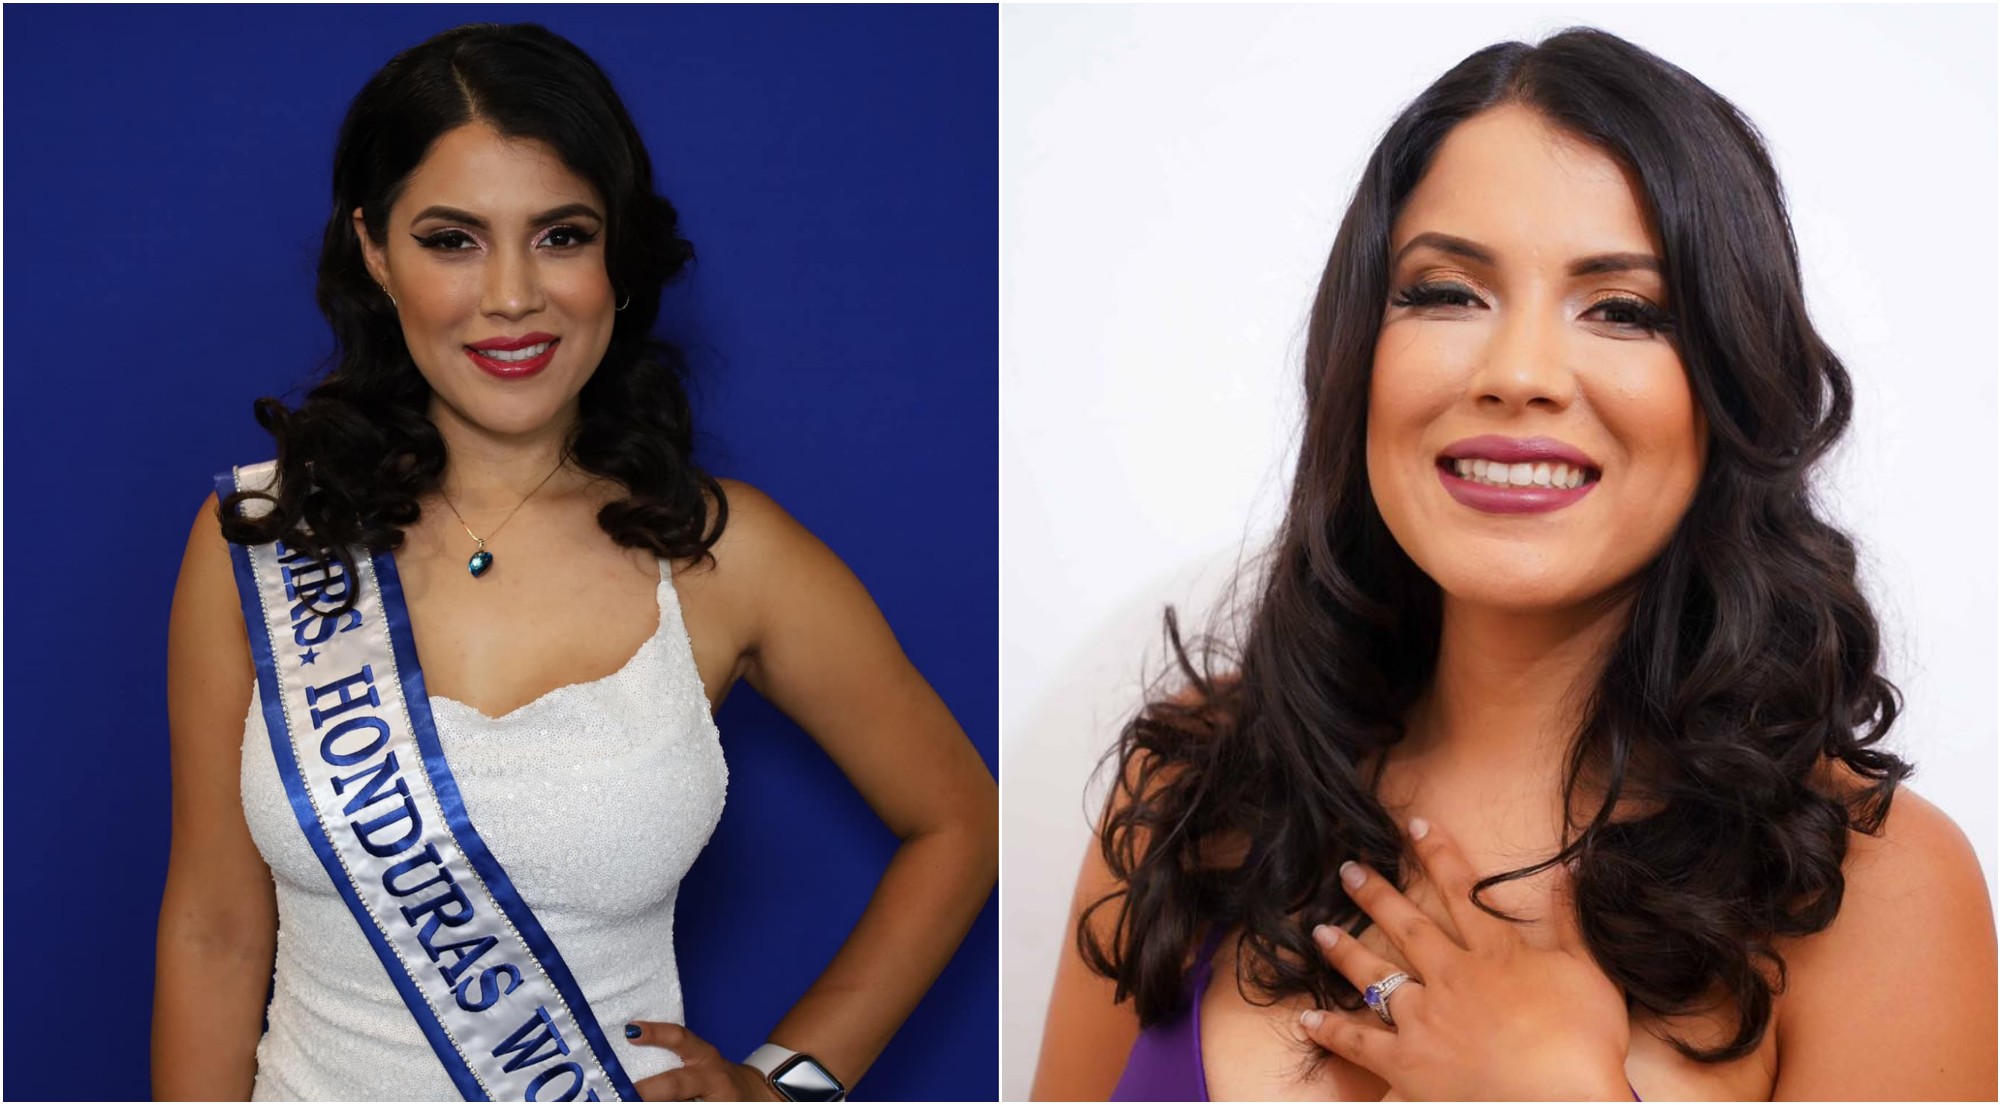 Hondureña Monika Cartagena participará en Mrs. World en Las Vegas